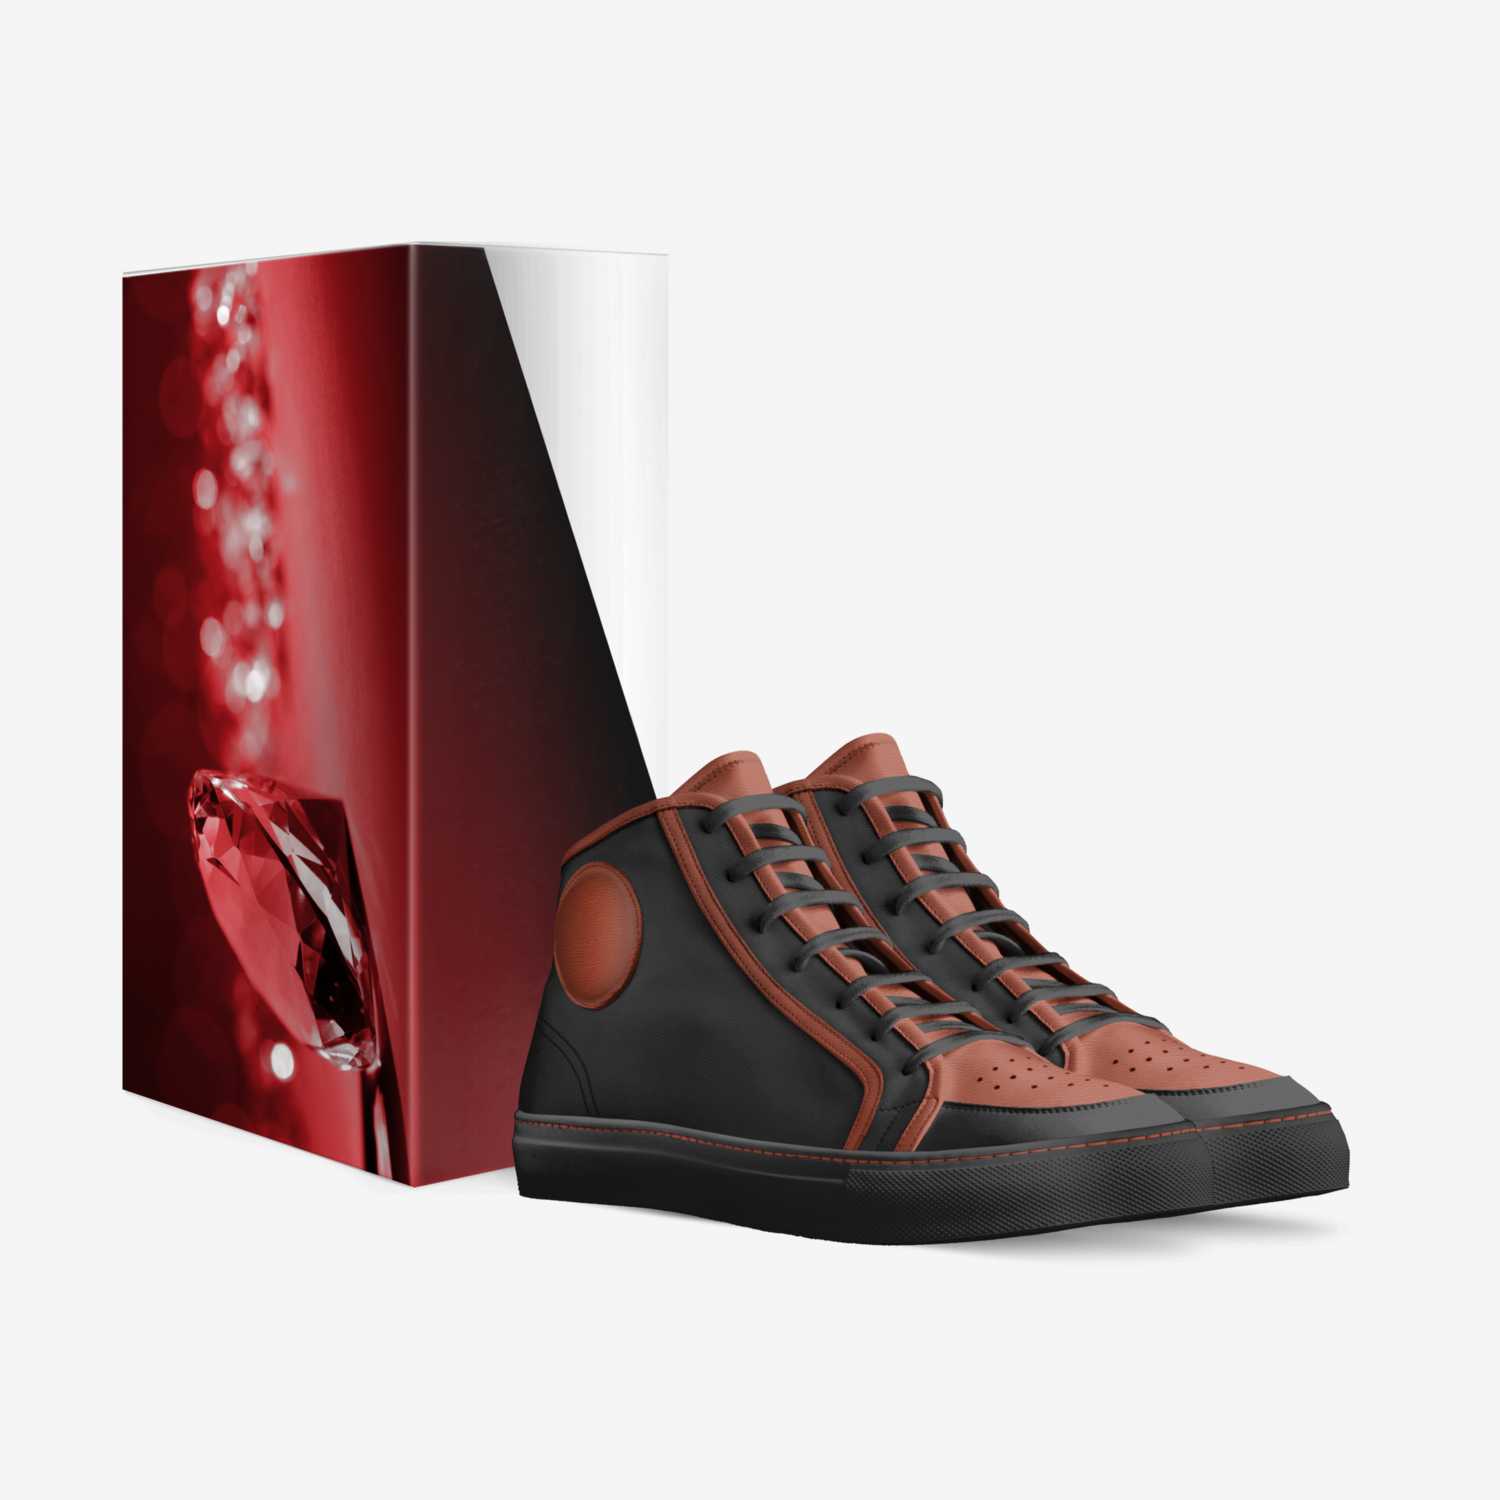 Jgchhgvv custom made in Italy shoes by Kdgttfvdssgh | Box view